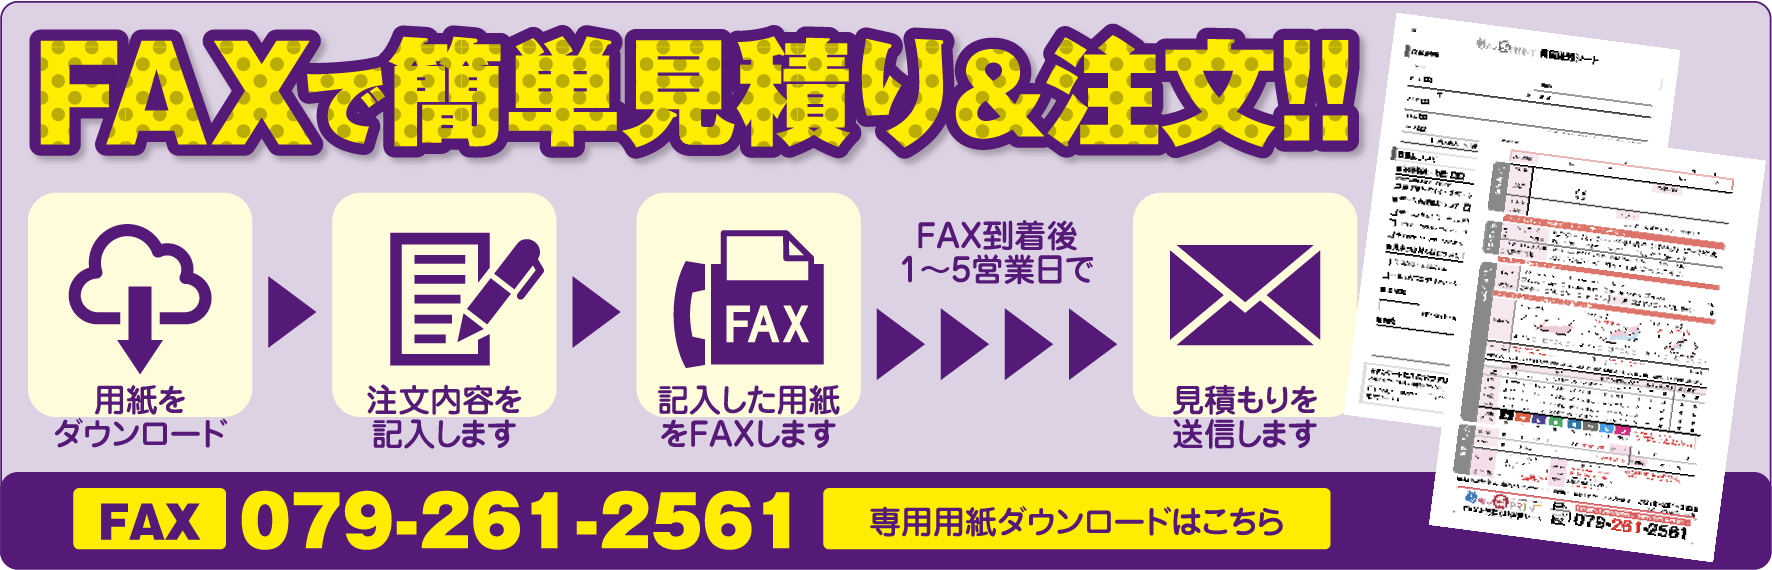 FAXで簡単見積り＆注文!!
専用用紙ダウンロードはこちら
FAX:079-261-2561
FAX到着後1〜5営業日で見積もりを
送信します